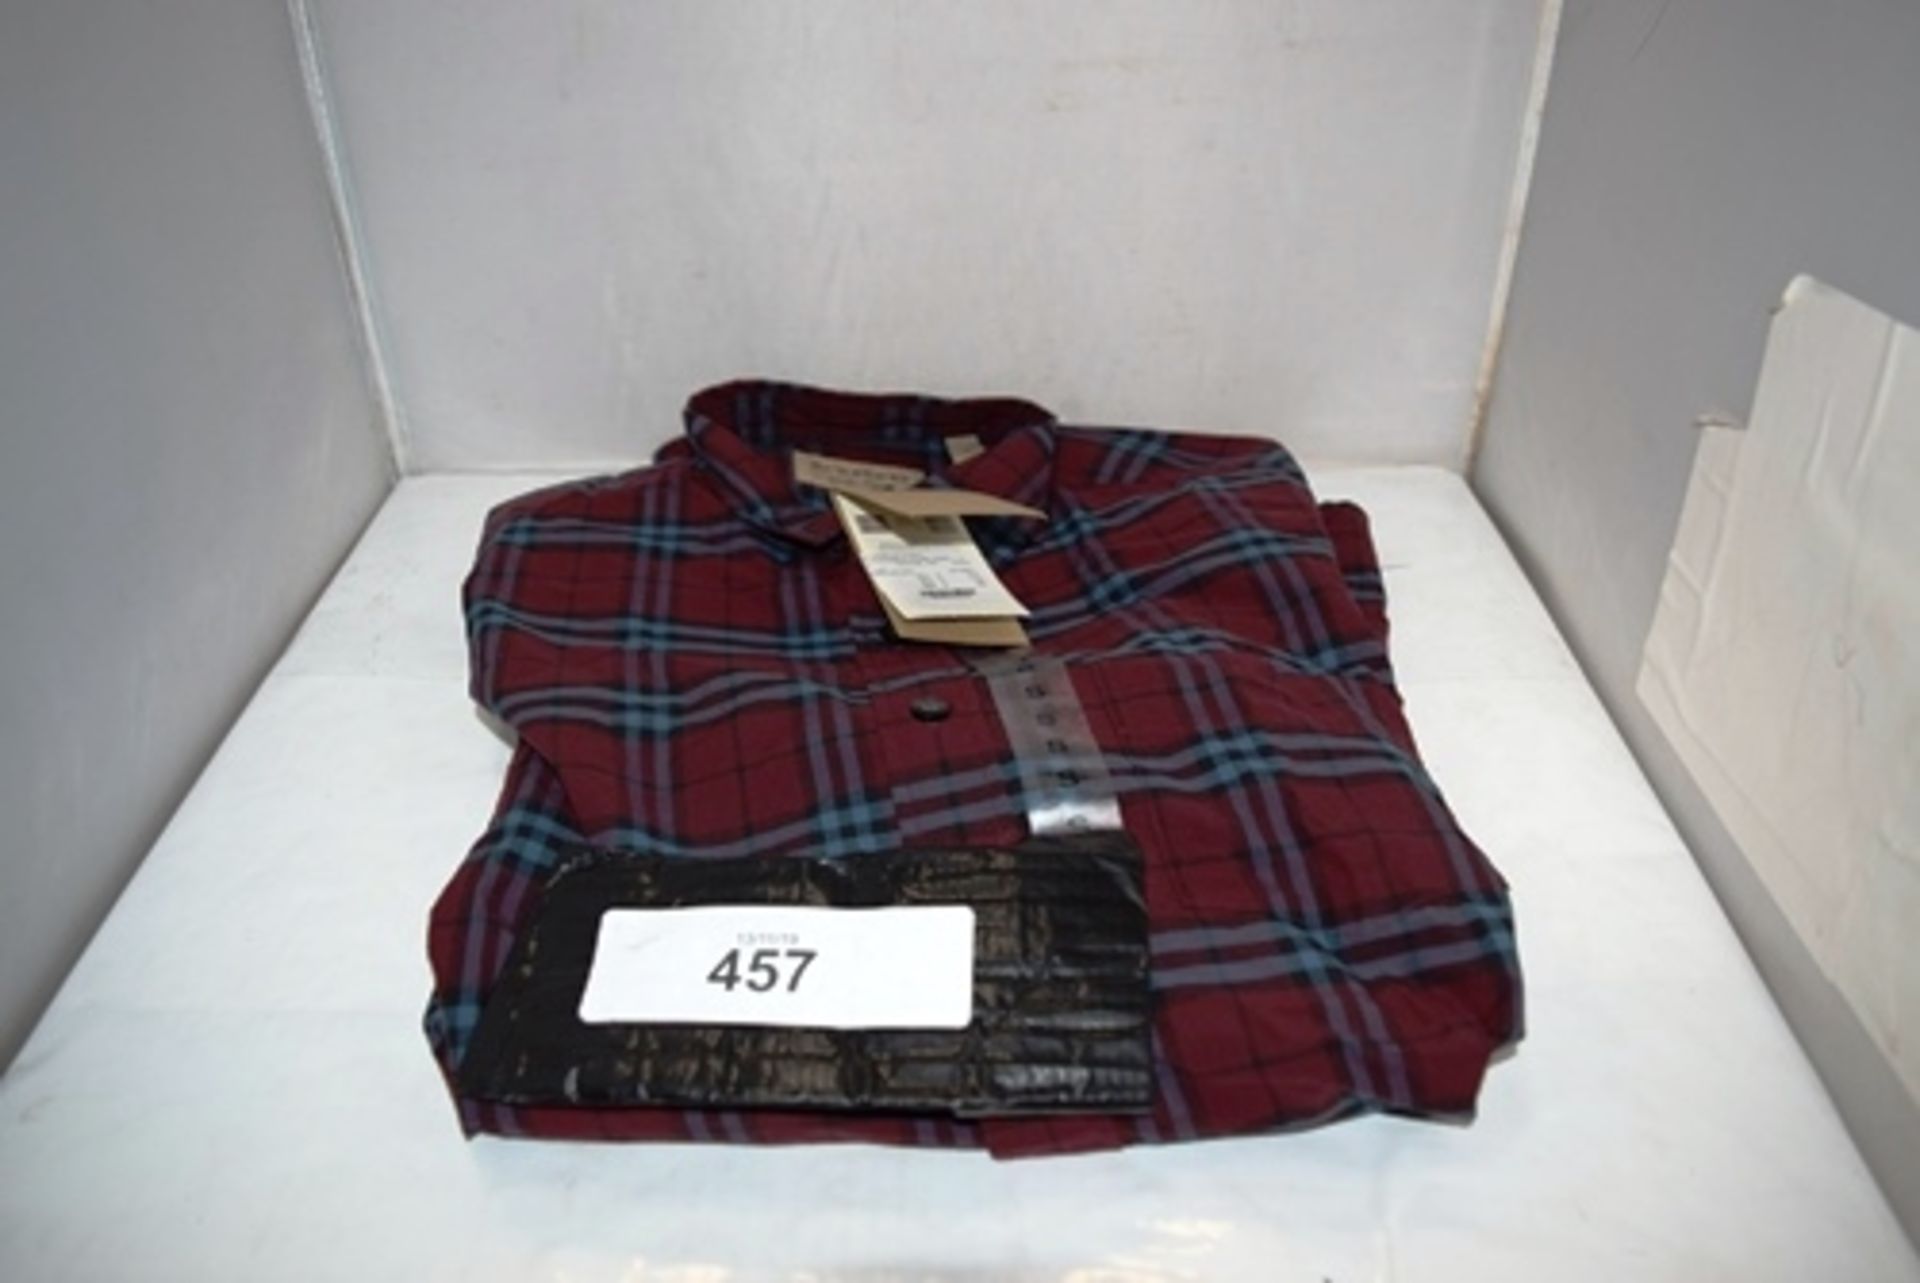 1 x Burberry Alexander crimson red long sleeve shirt, size small - New (C14B)